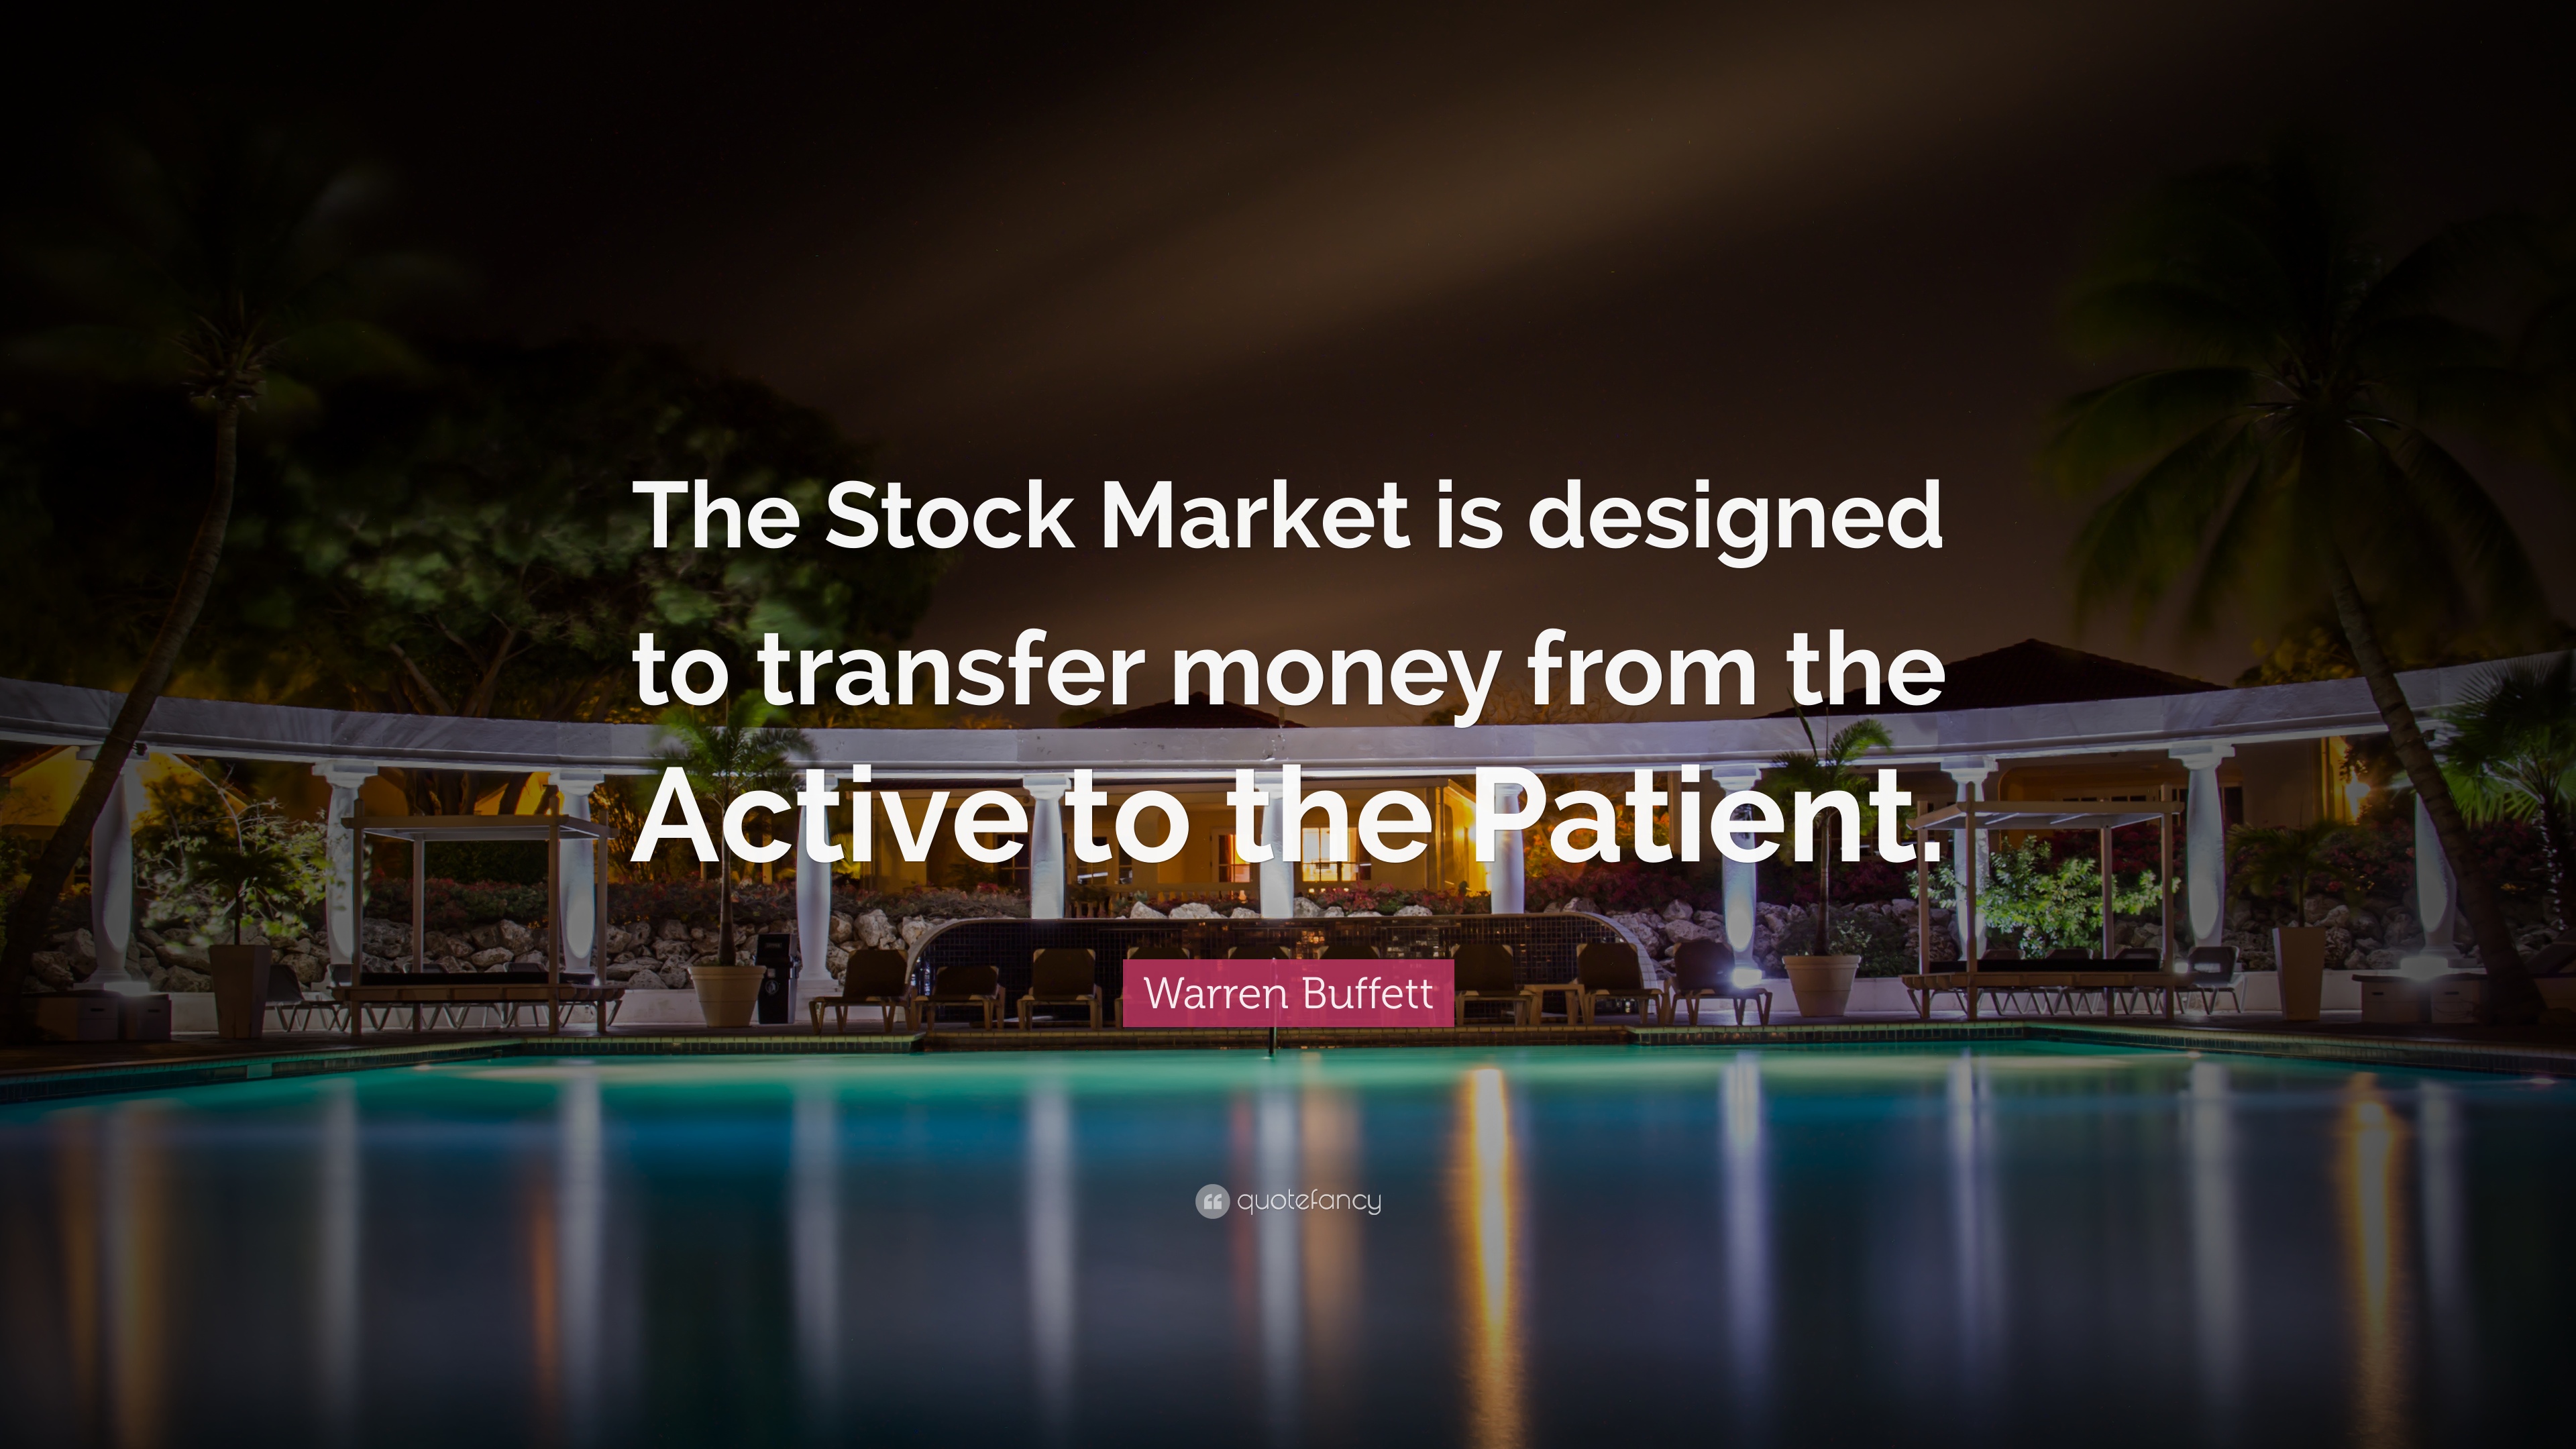 Warren Buffett Quote: “The Stock Market is designed to